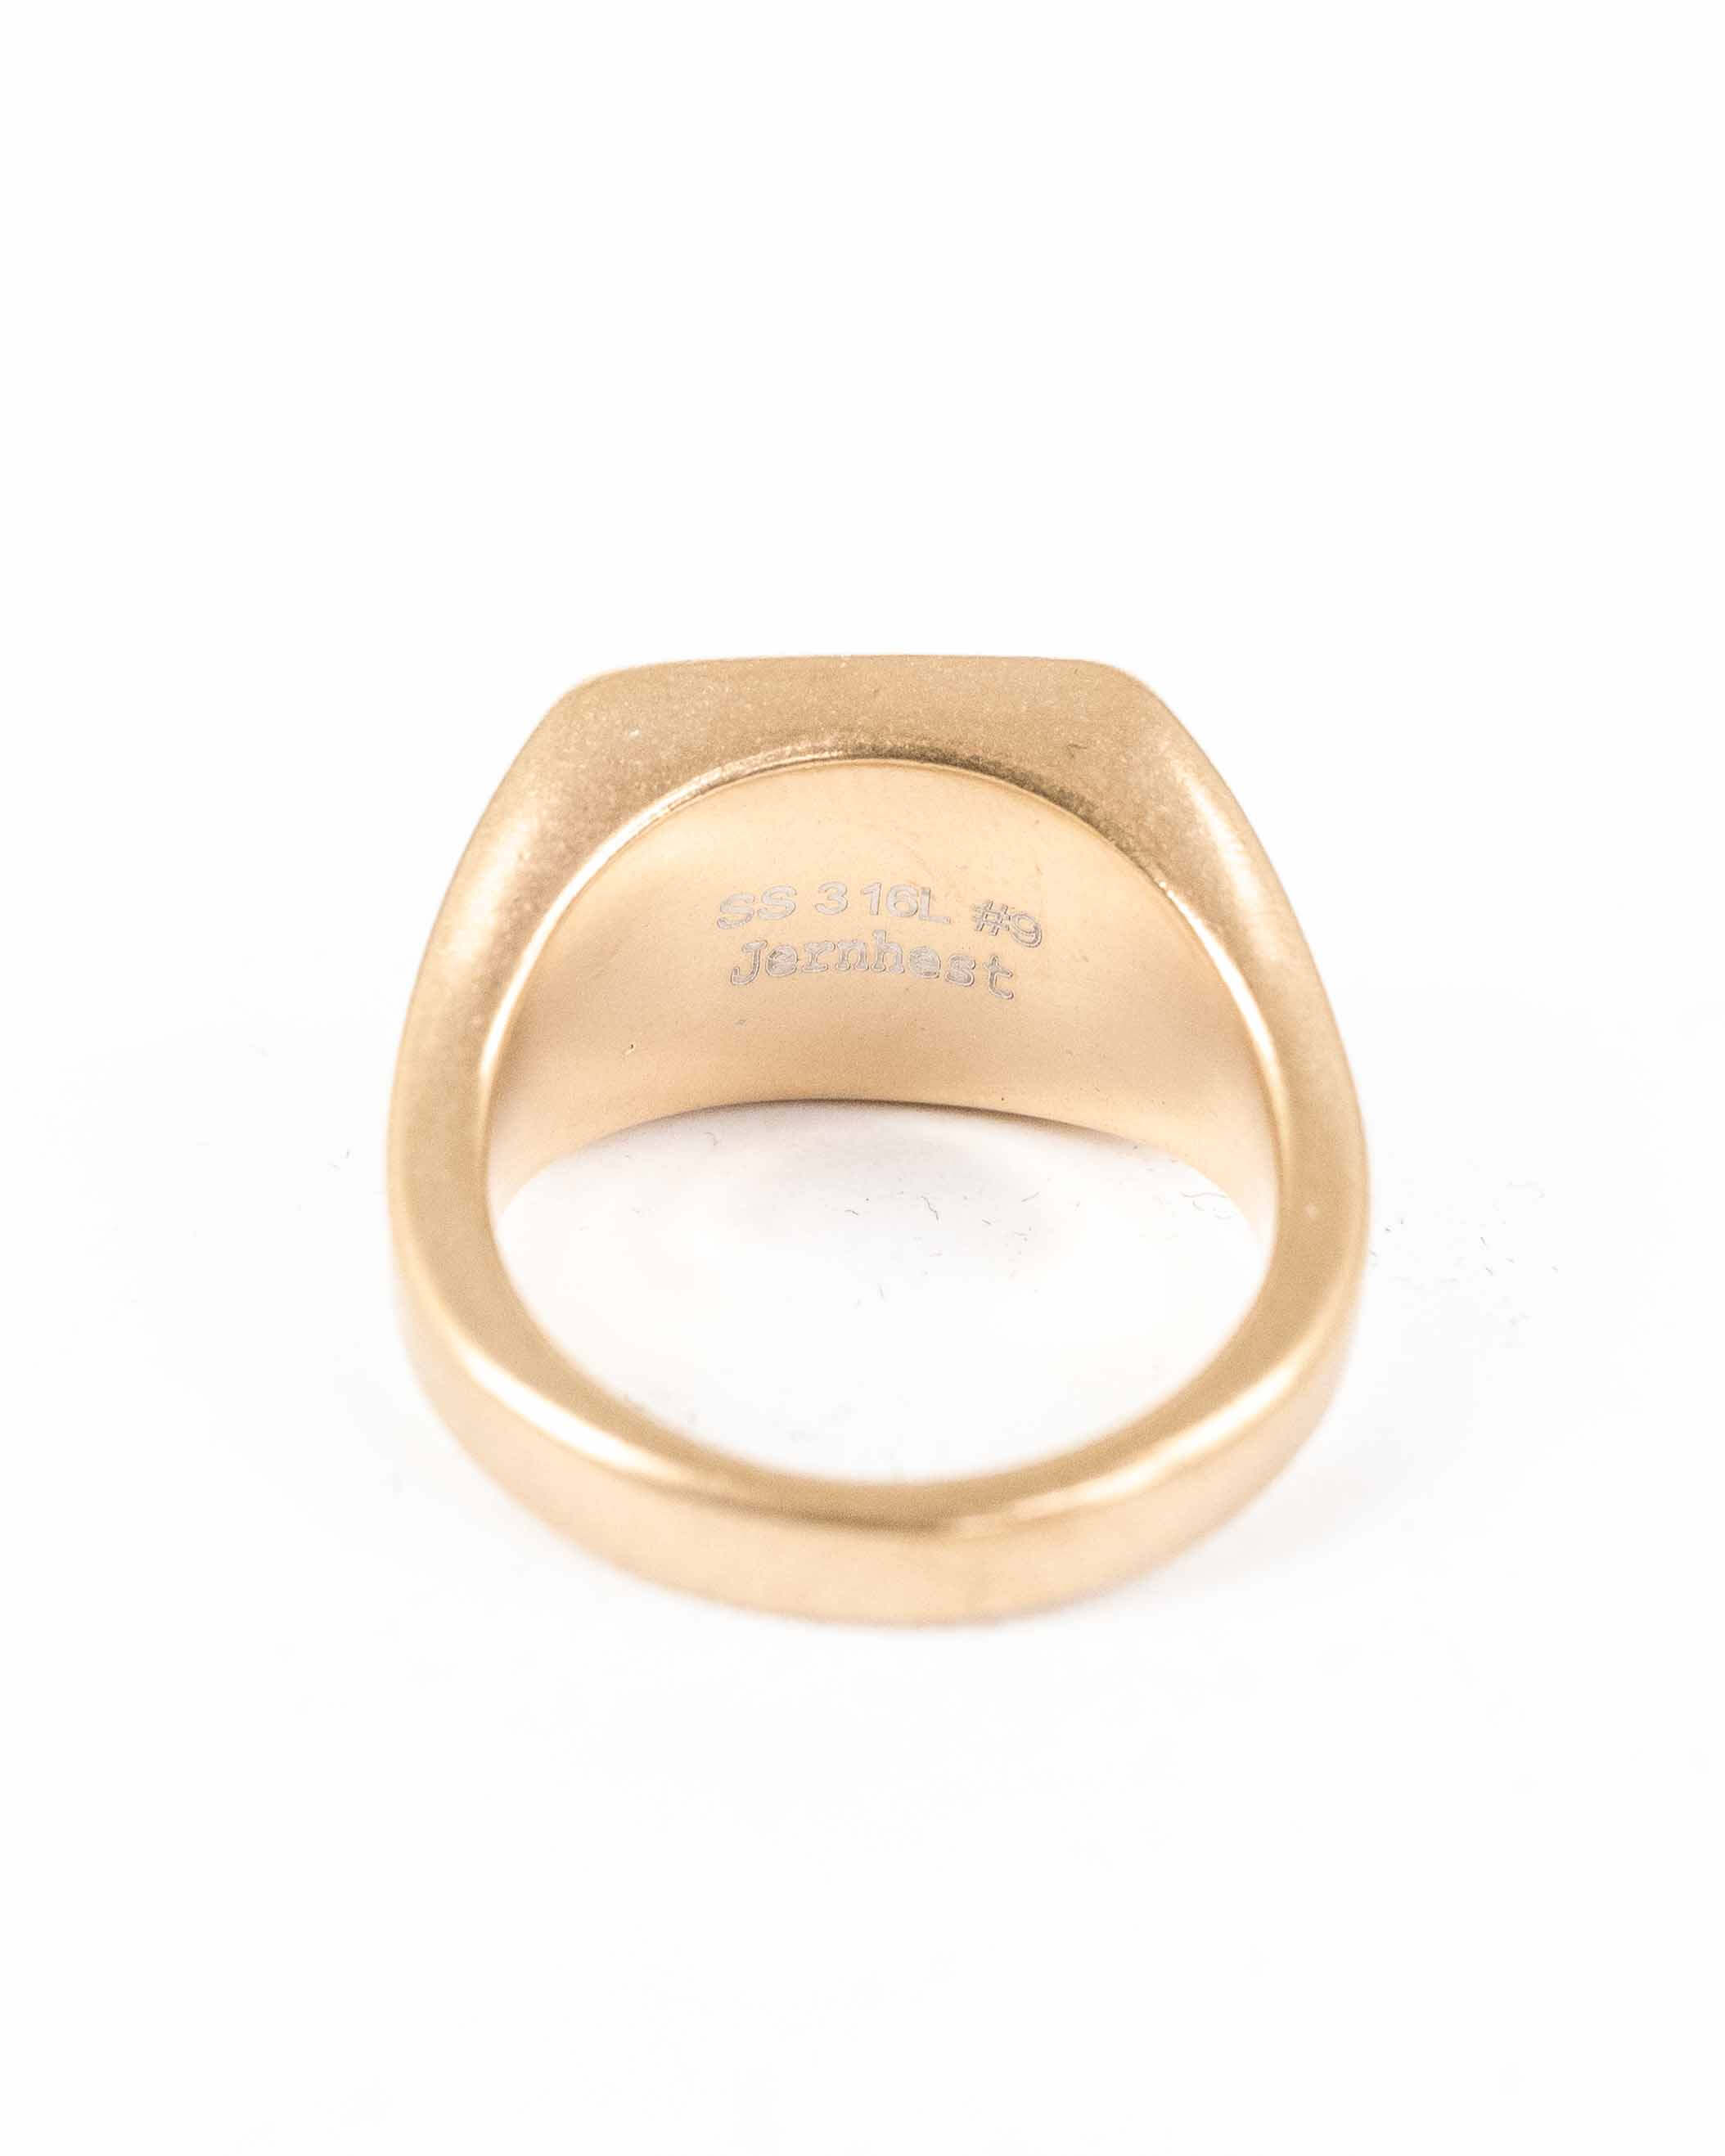 Einfach Ring verkleinern #karakaan #gold #fy #trending #fyy #goldschmi